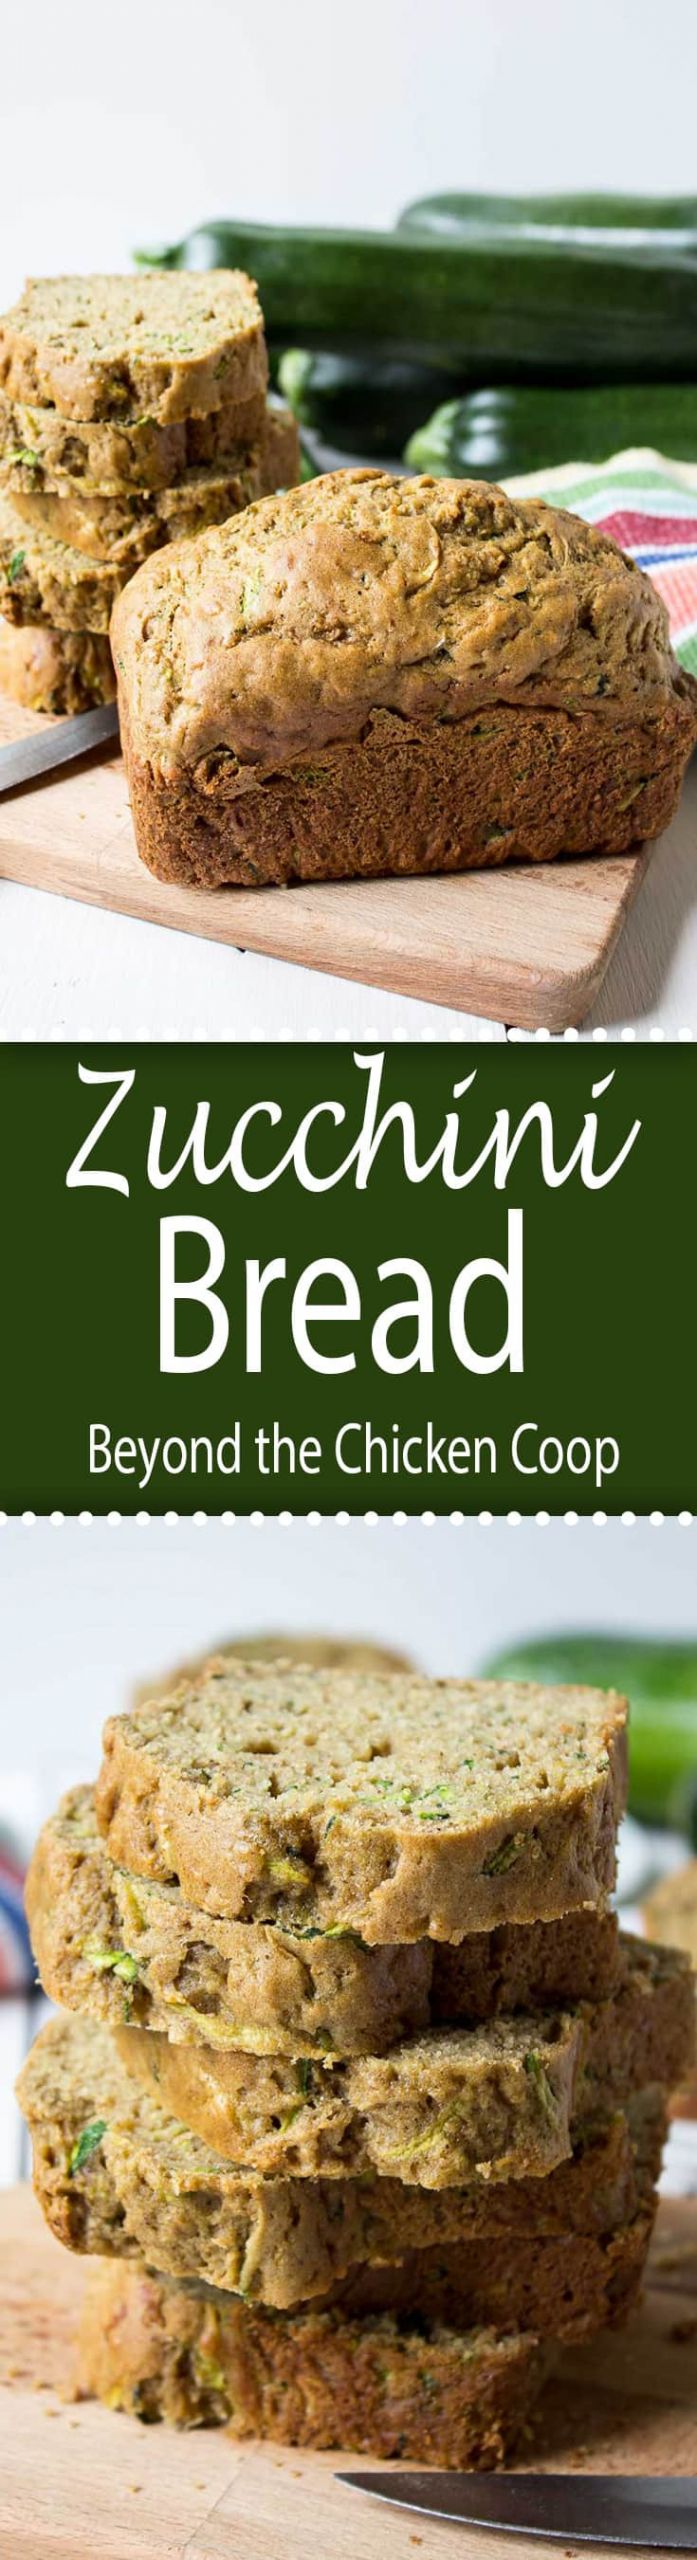 Fiber In Zucchini
 Whole Wheat Zucchini Bread Beyond The Chicken Coop